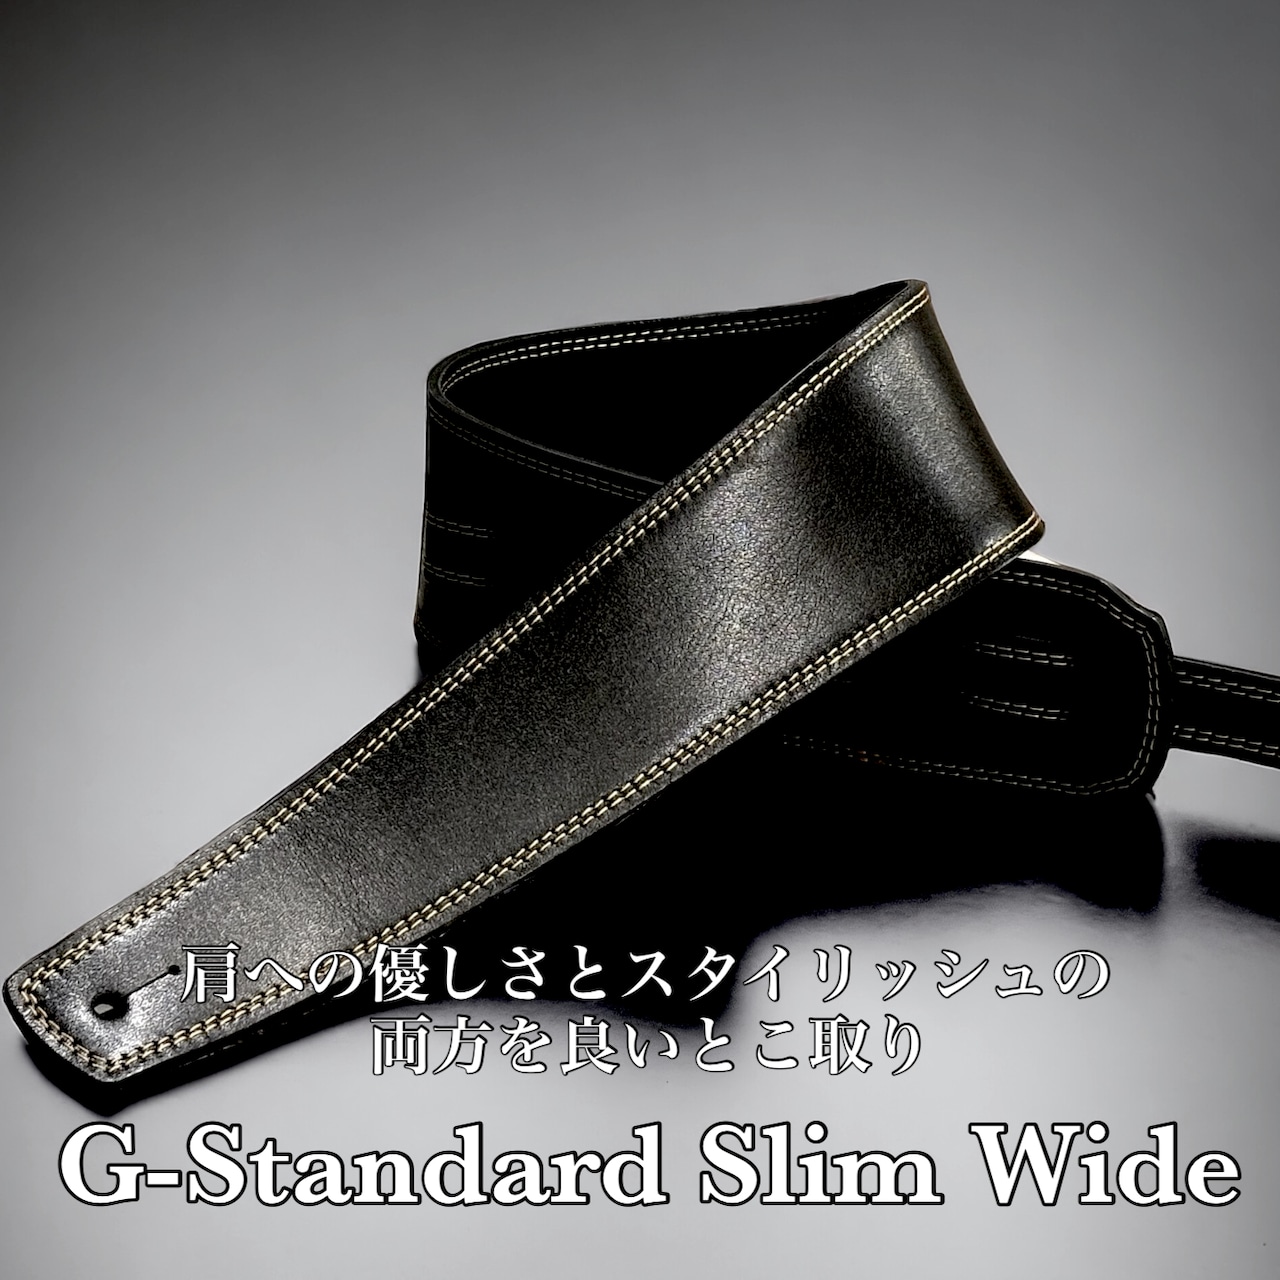 G-Standard Slim Wide